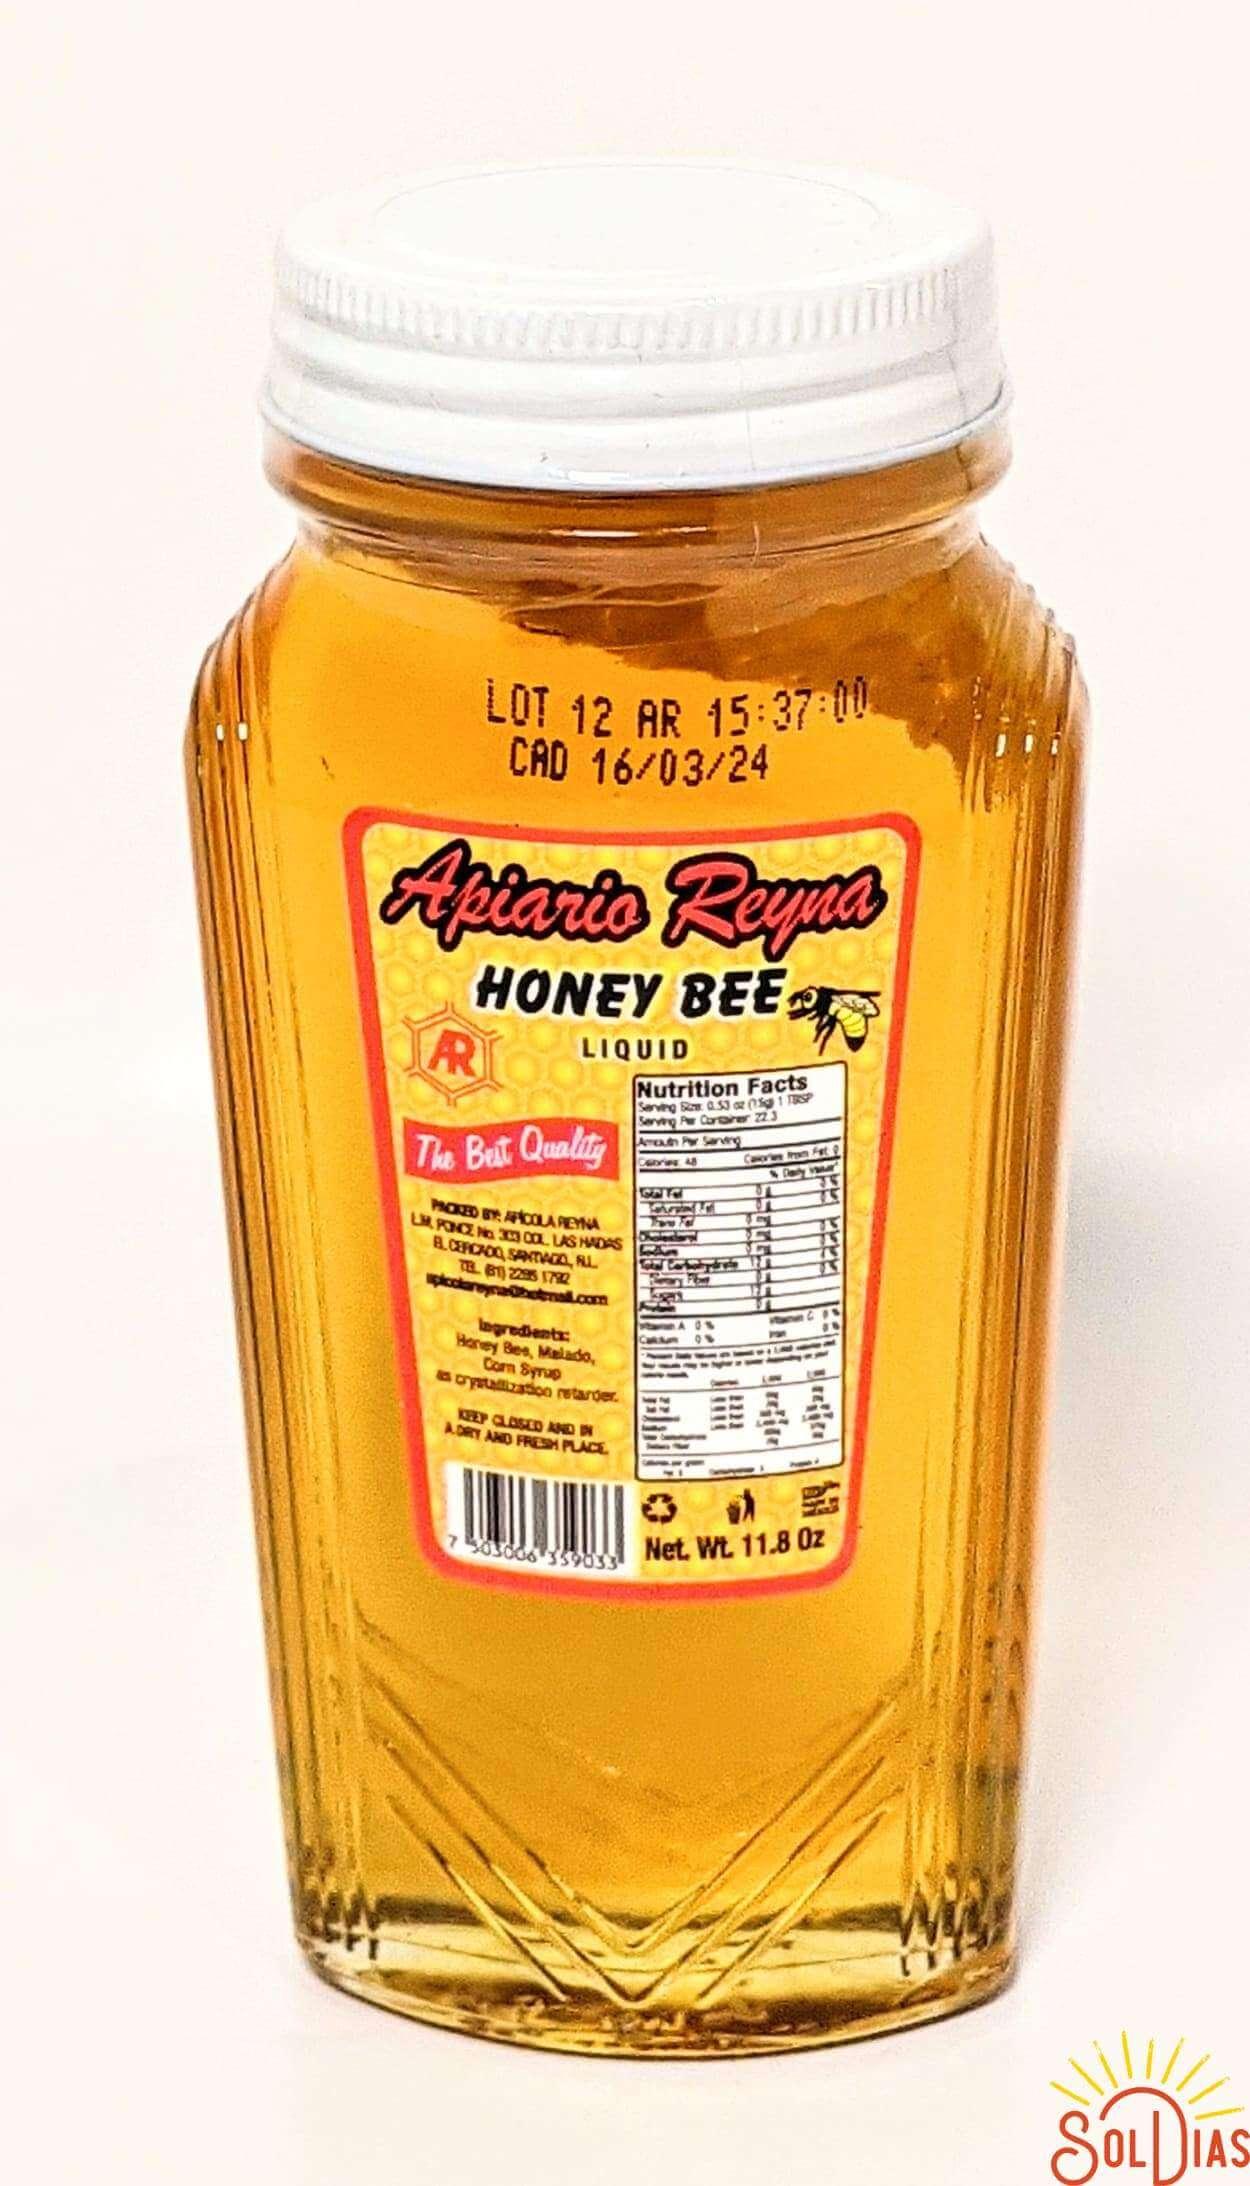 Apiario Reyna - Honey Bee Liquid 11.8 oz